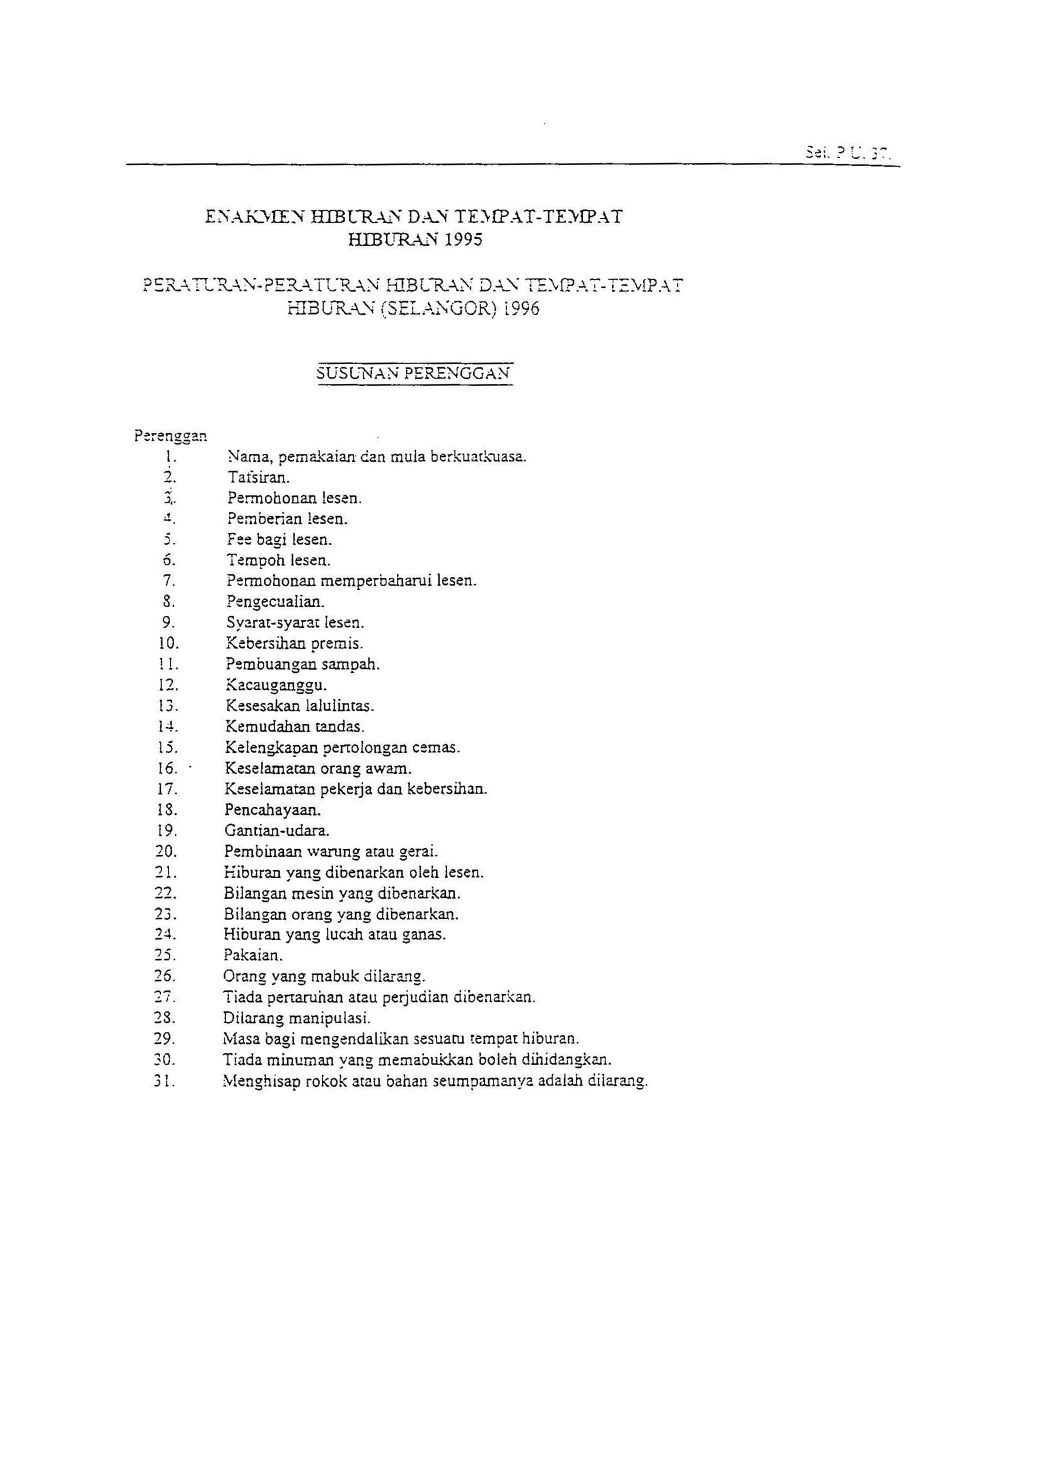 Peraturan-Peraturan Hiburan Dan Tempat-Tempat Hiburan (Selangor) 1996 – Enakmen Hiburan Dan Tempat-Tempat Hiburan 1995